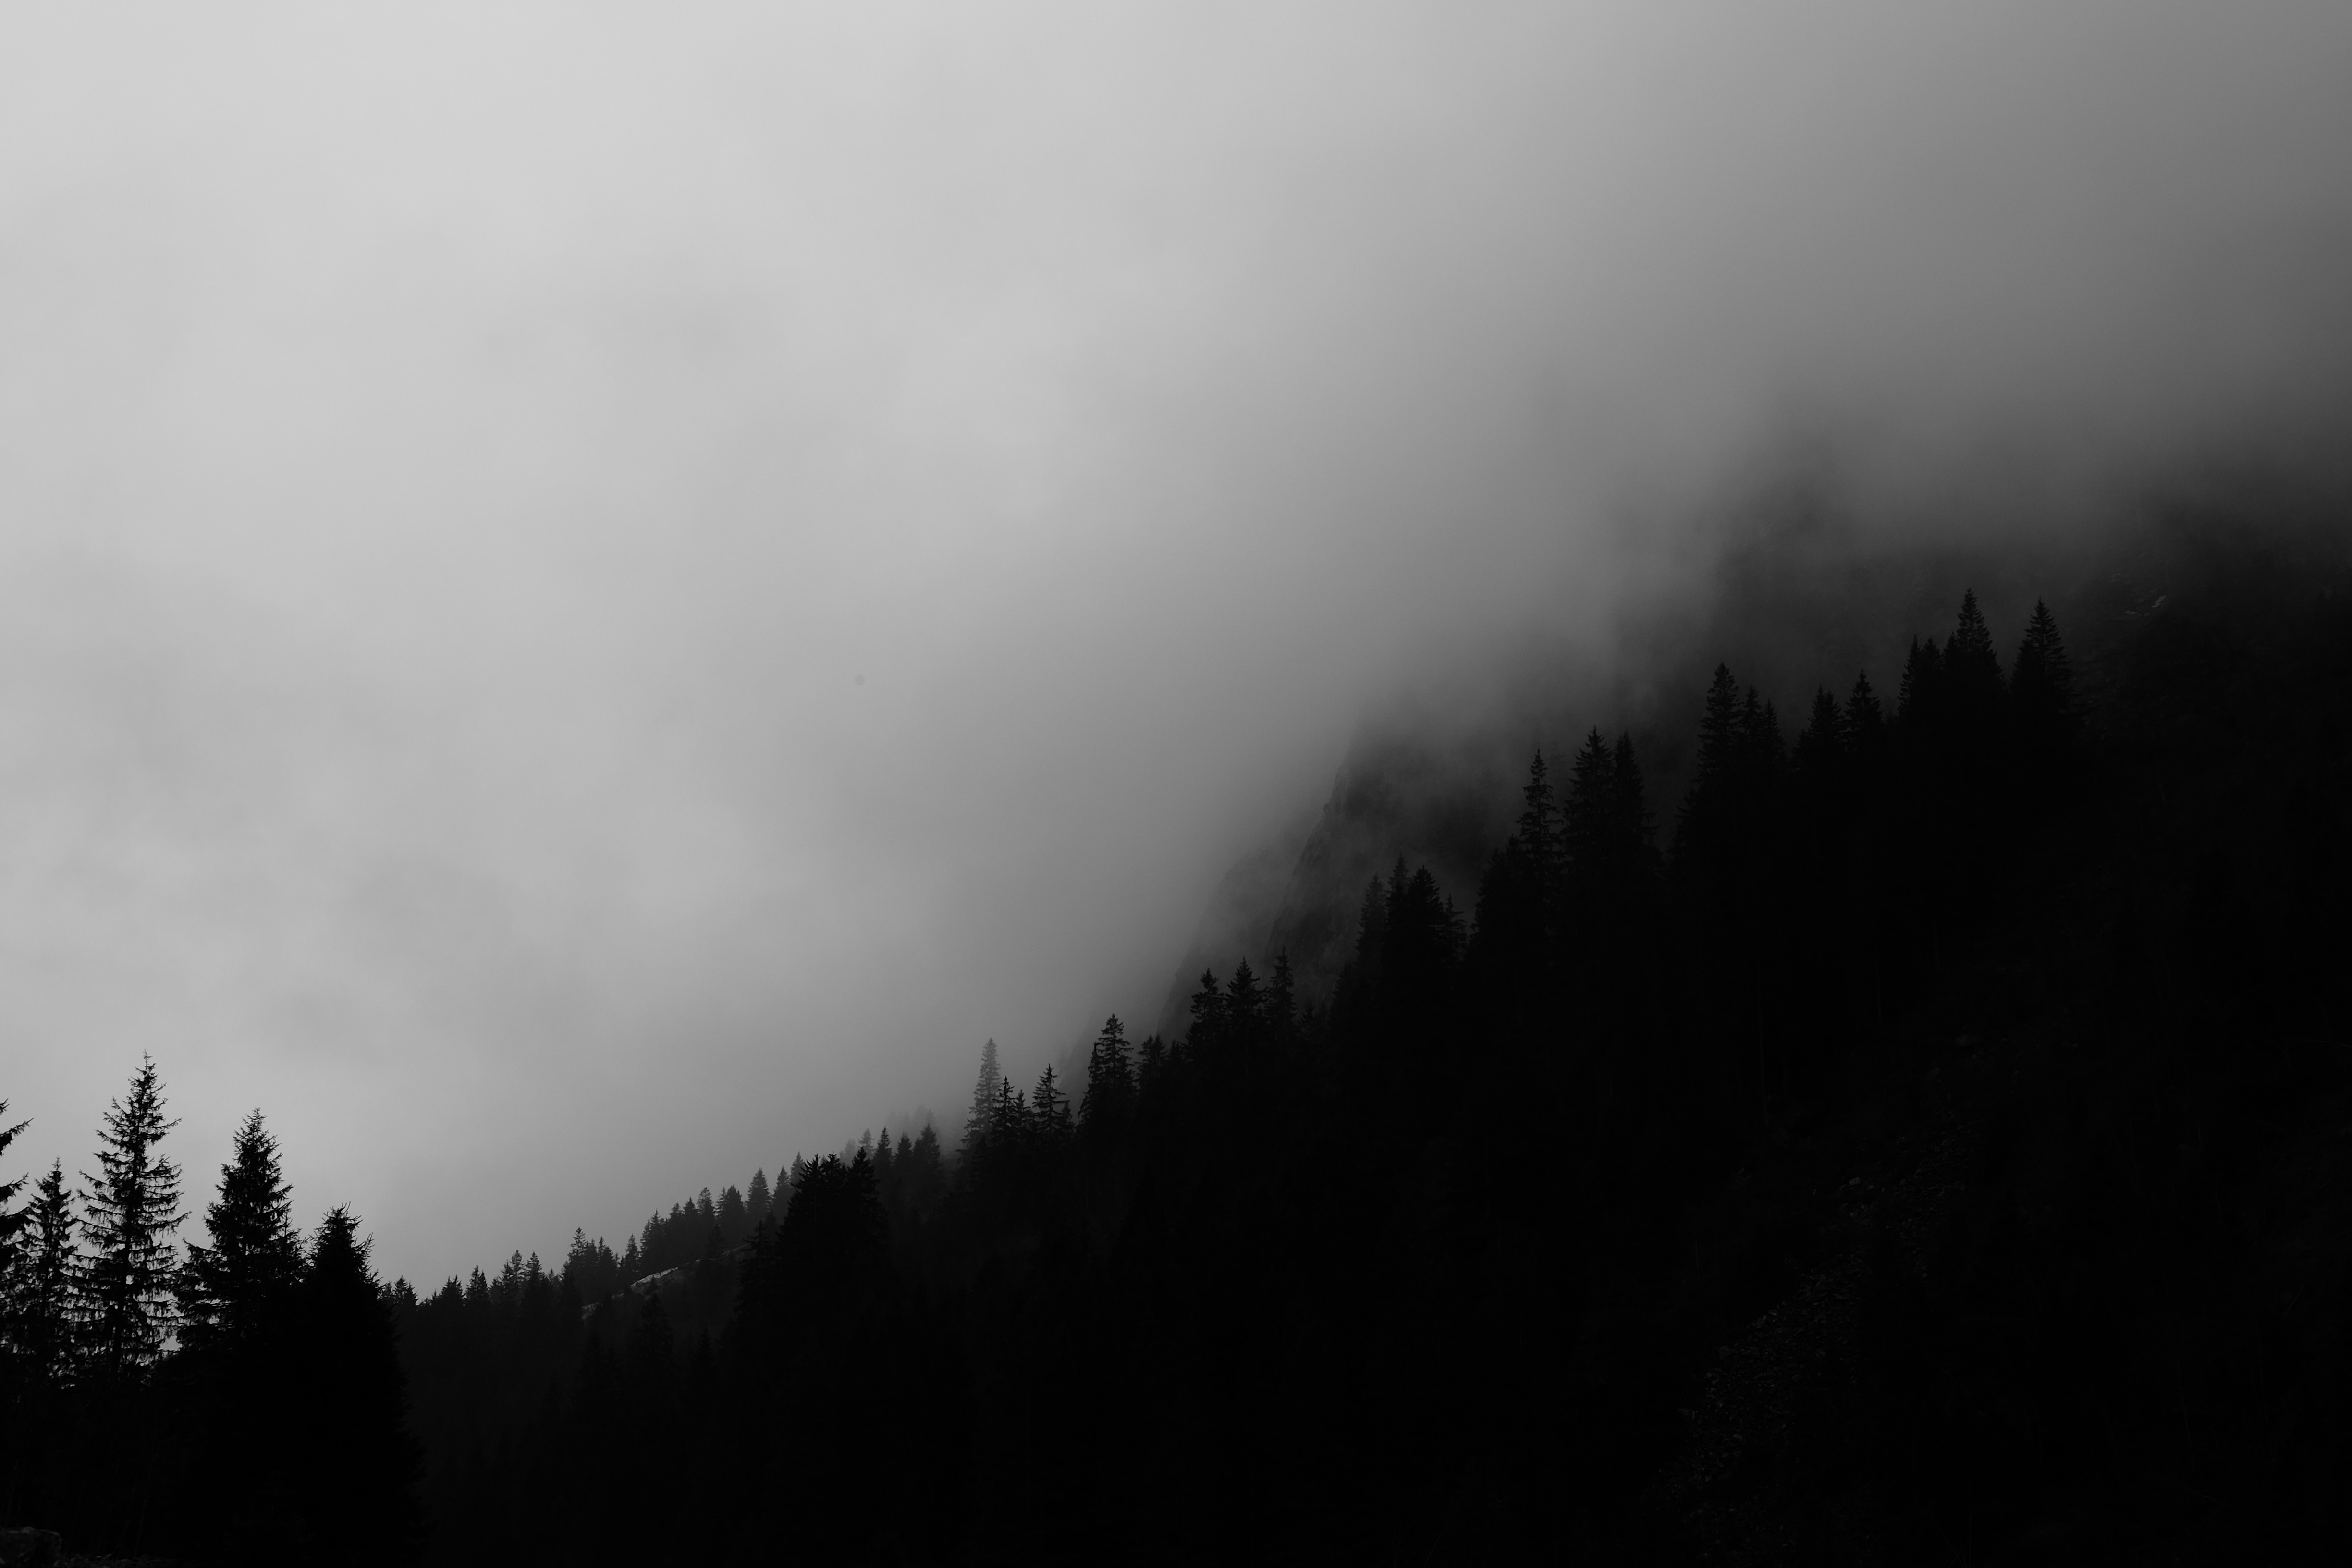 dark, bw, black, trees, forest, fog, chb